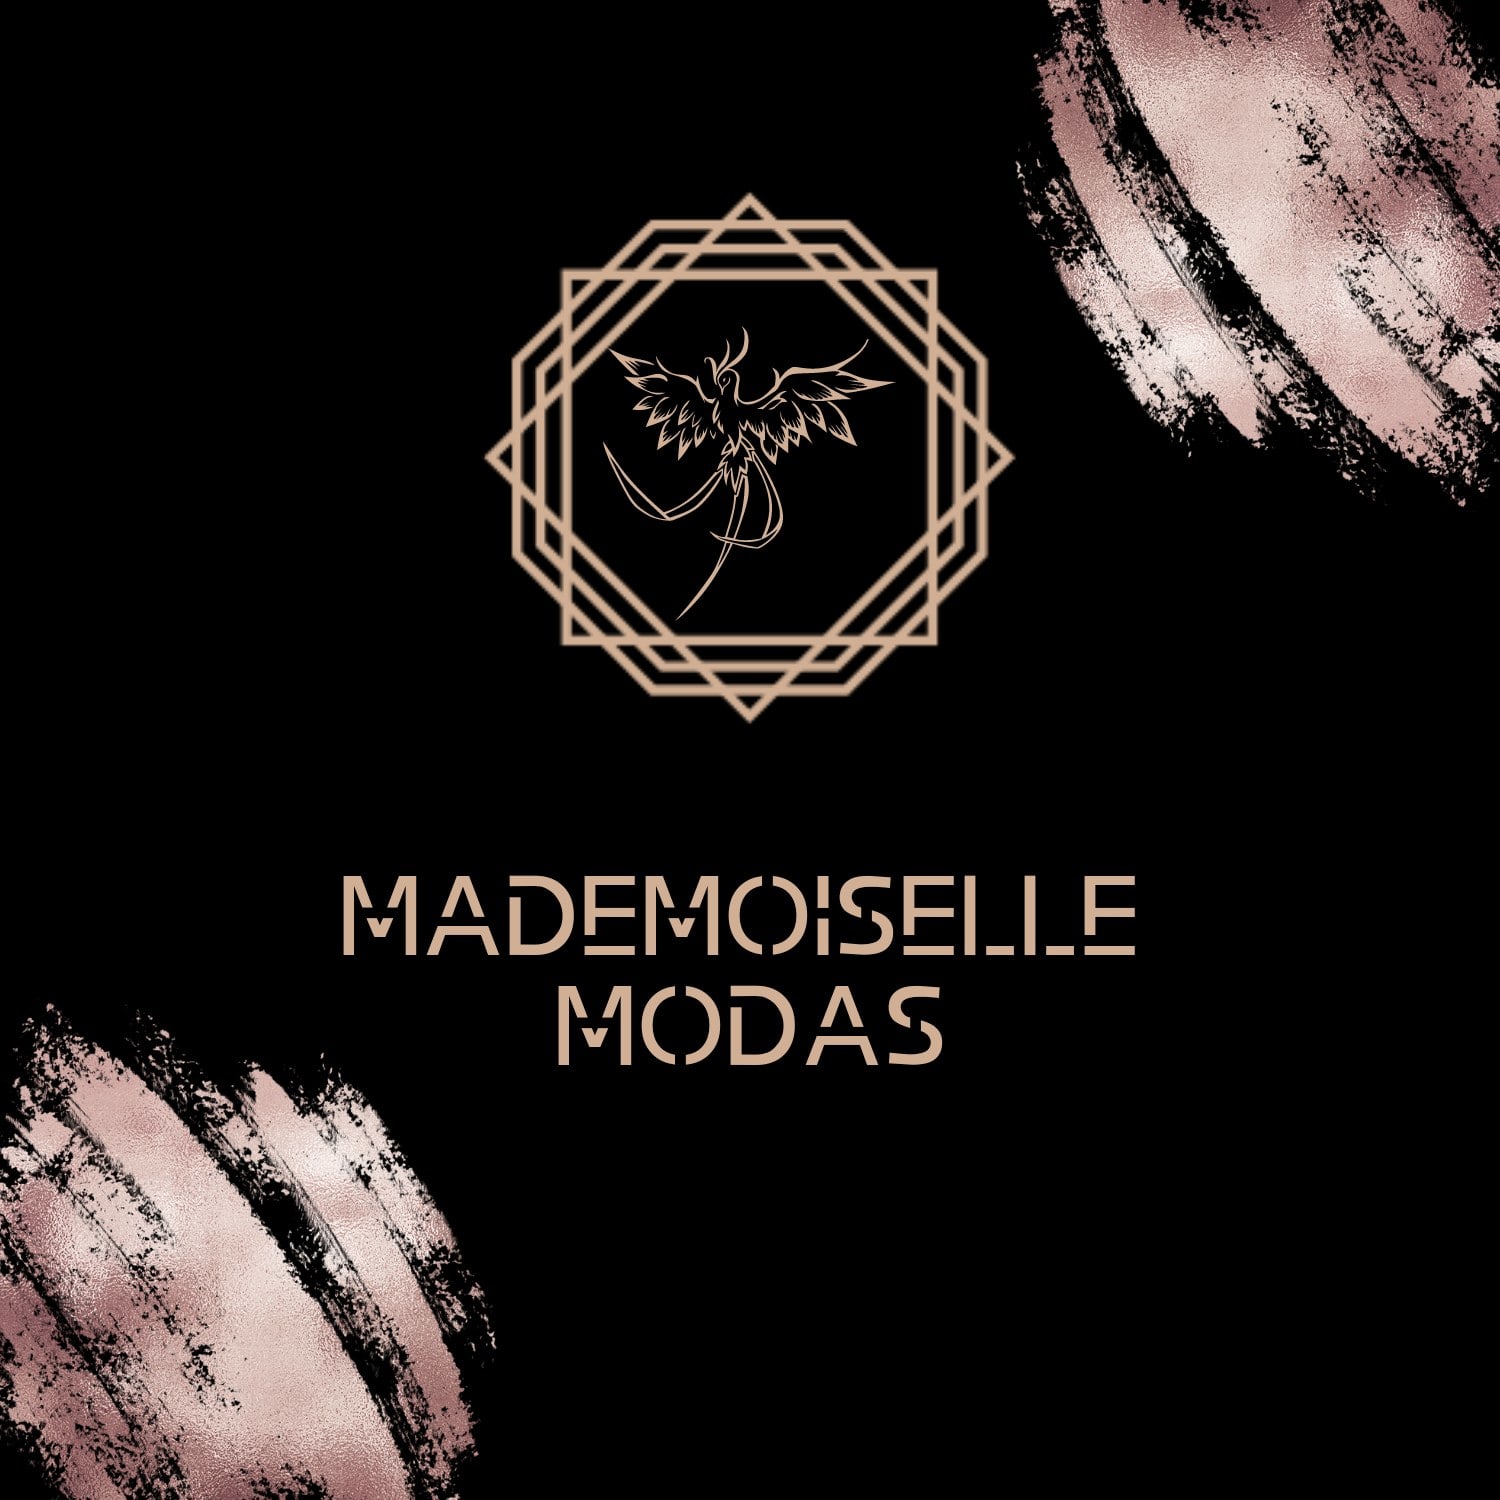 Mademoiselle Modas